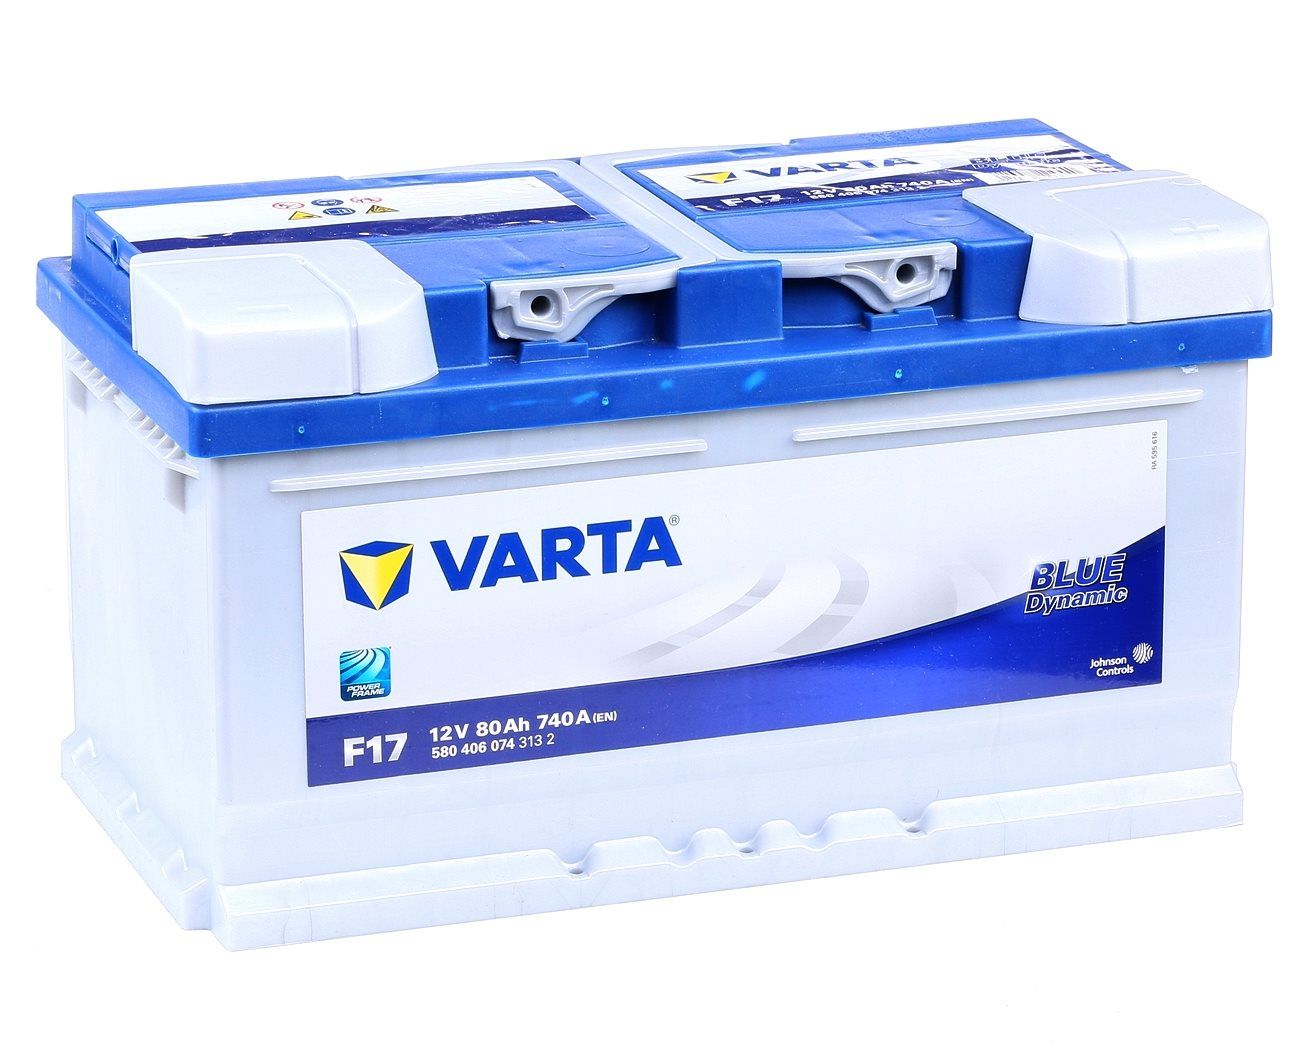 VARTA Batterie 5804060743132